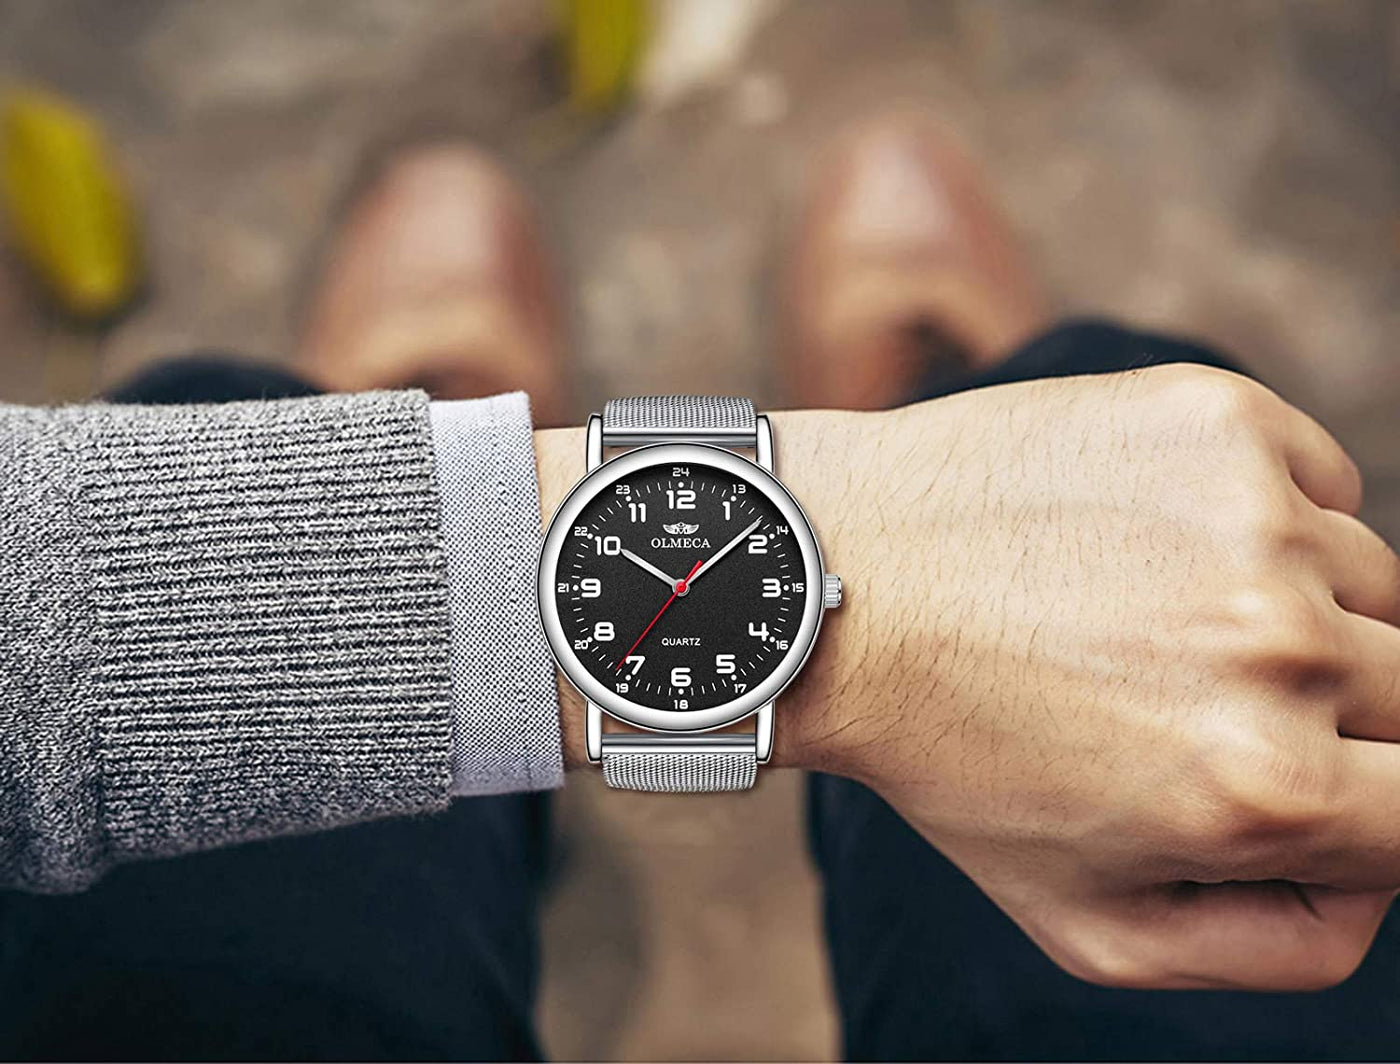 OLMECA Men’s Watch Wrist Watches Analog Quartz Waterproof Stainless Steel Mesh Band Simple Watch for Men 709wd